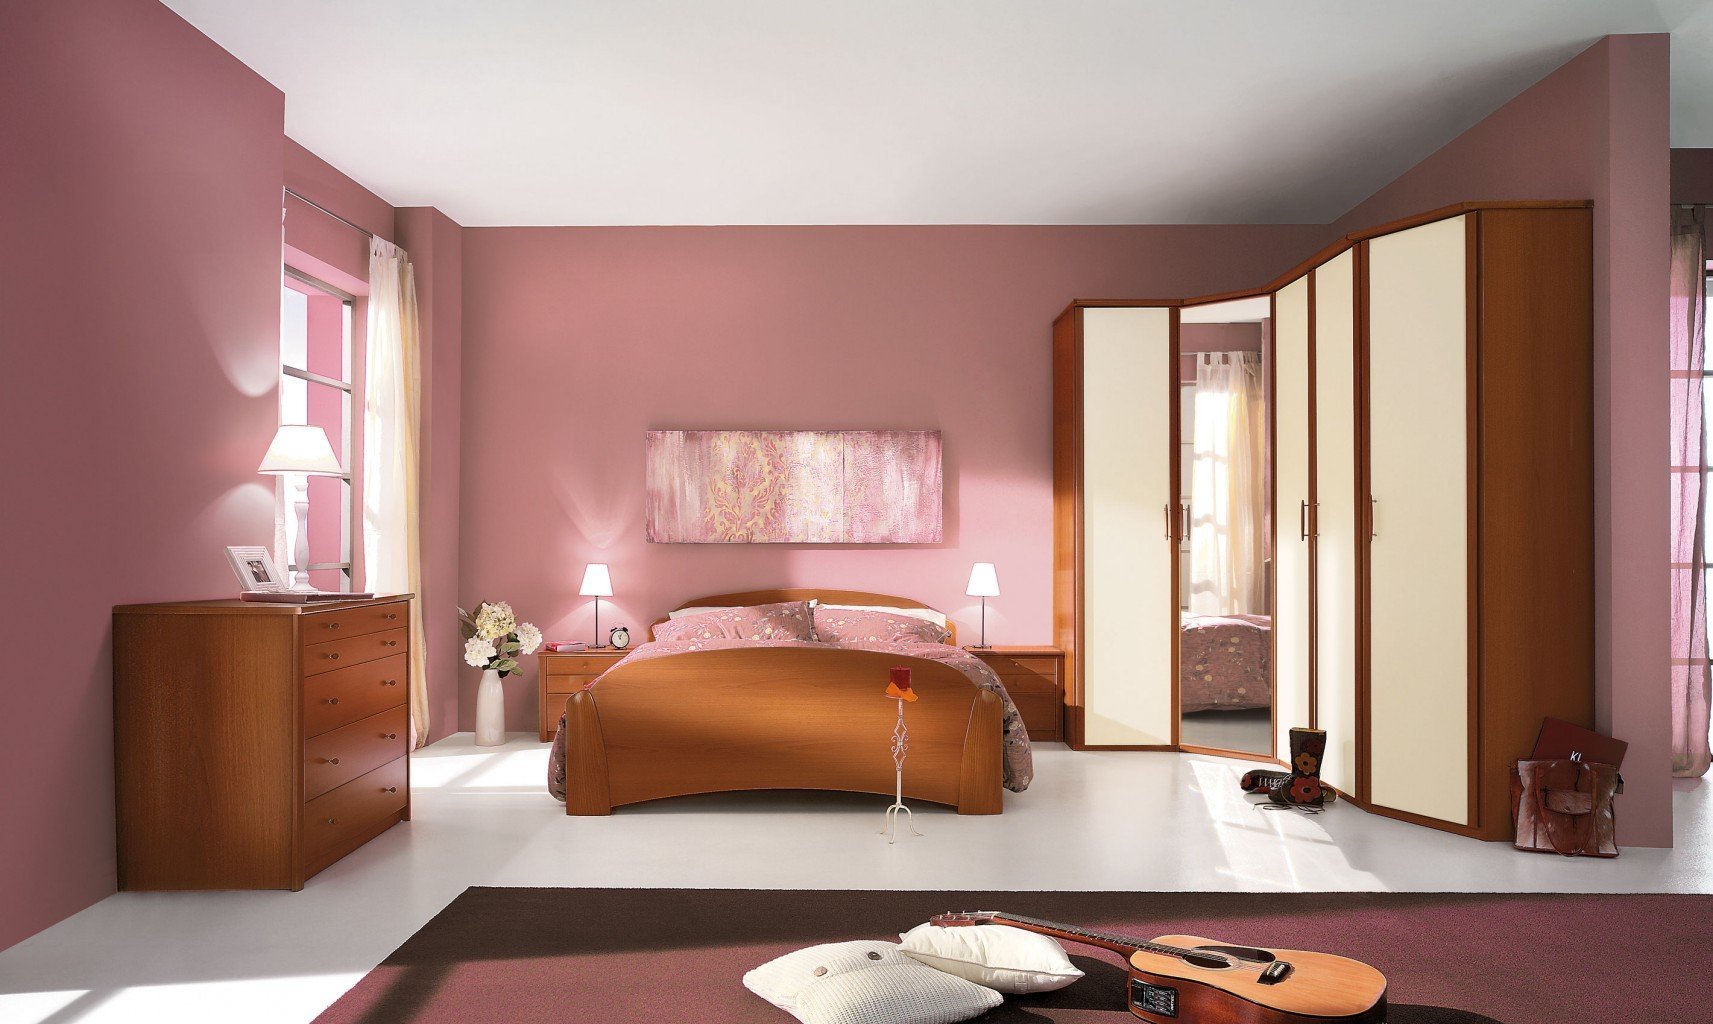 Интерьер комнаты с мебелью цвета вишня